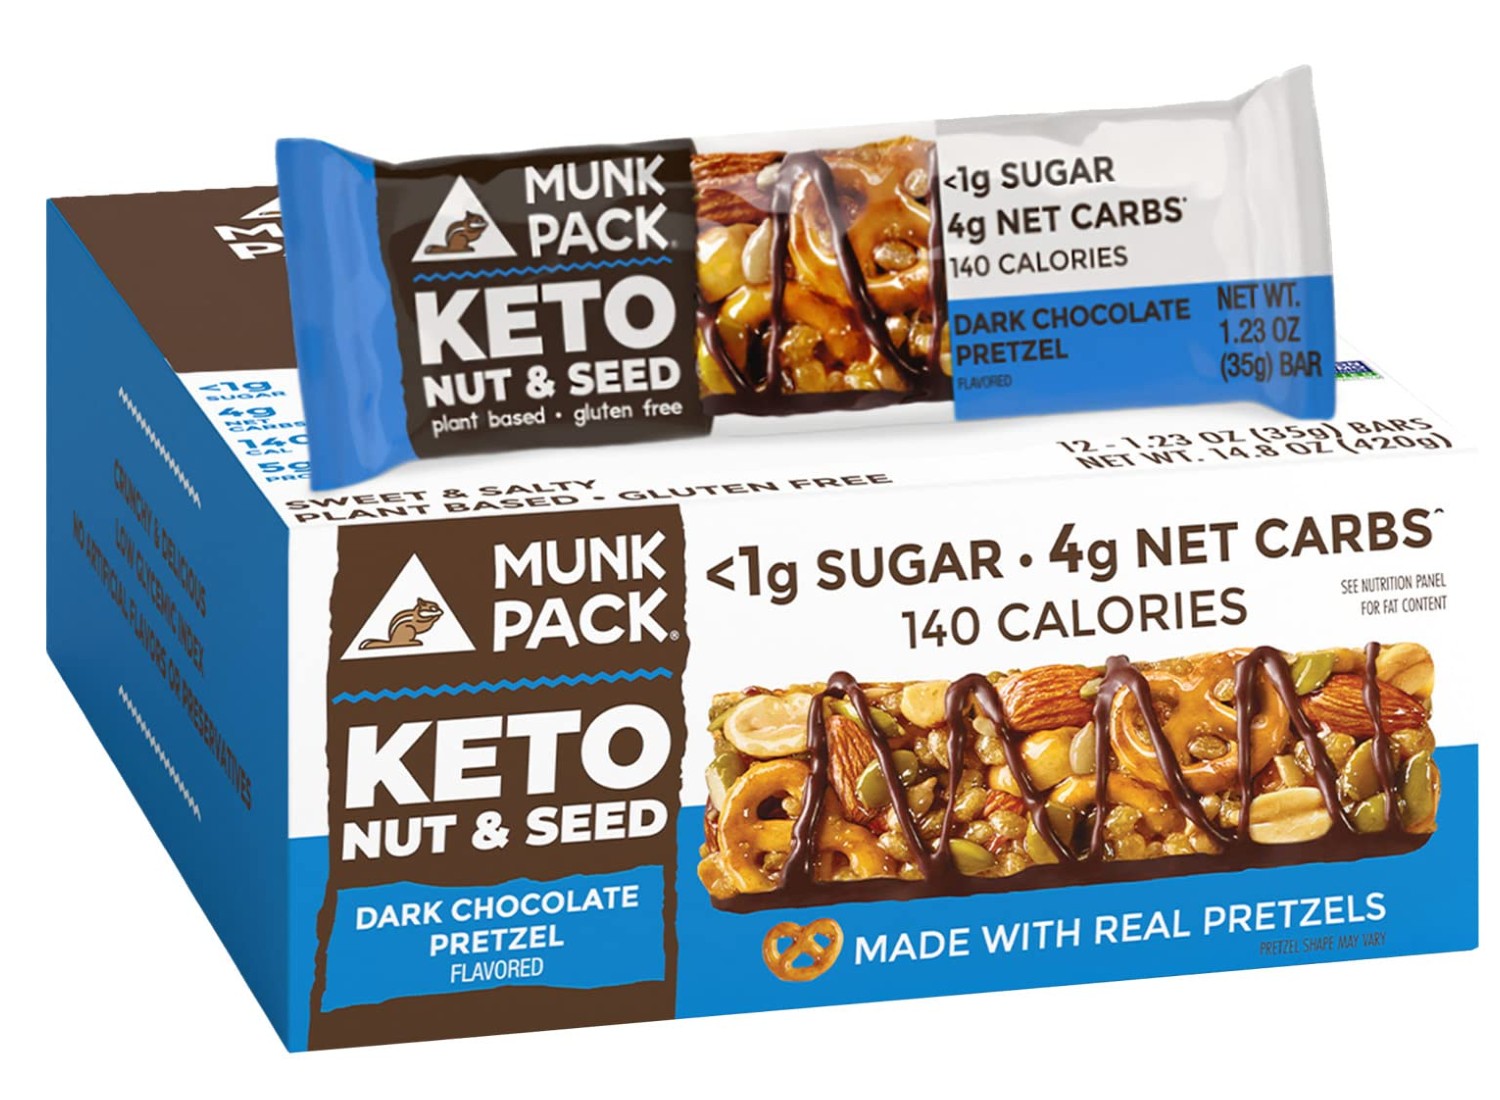 The Munk Pack Dark Chocolate Pretzel Nut & Seed Bar sold on Amazon